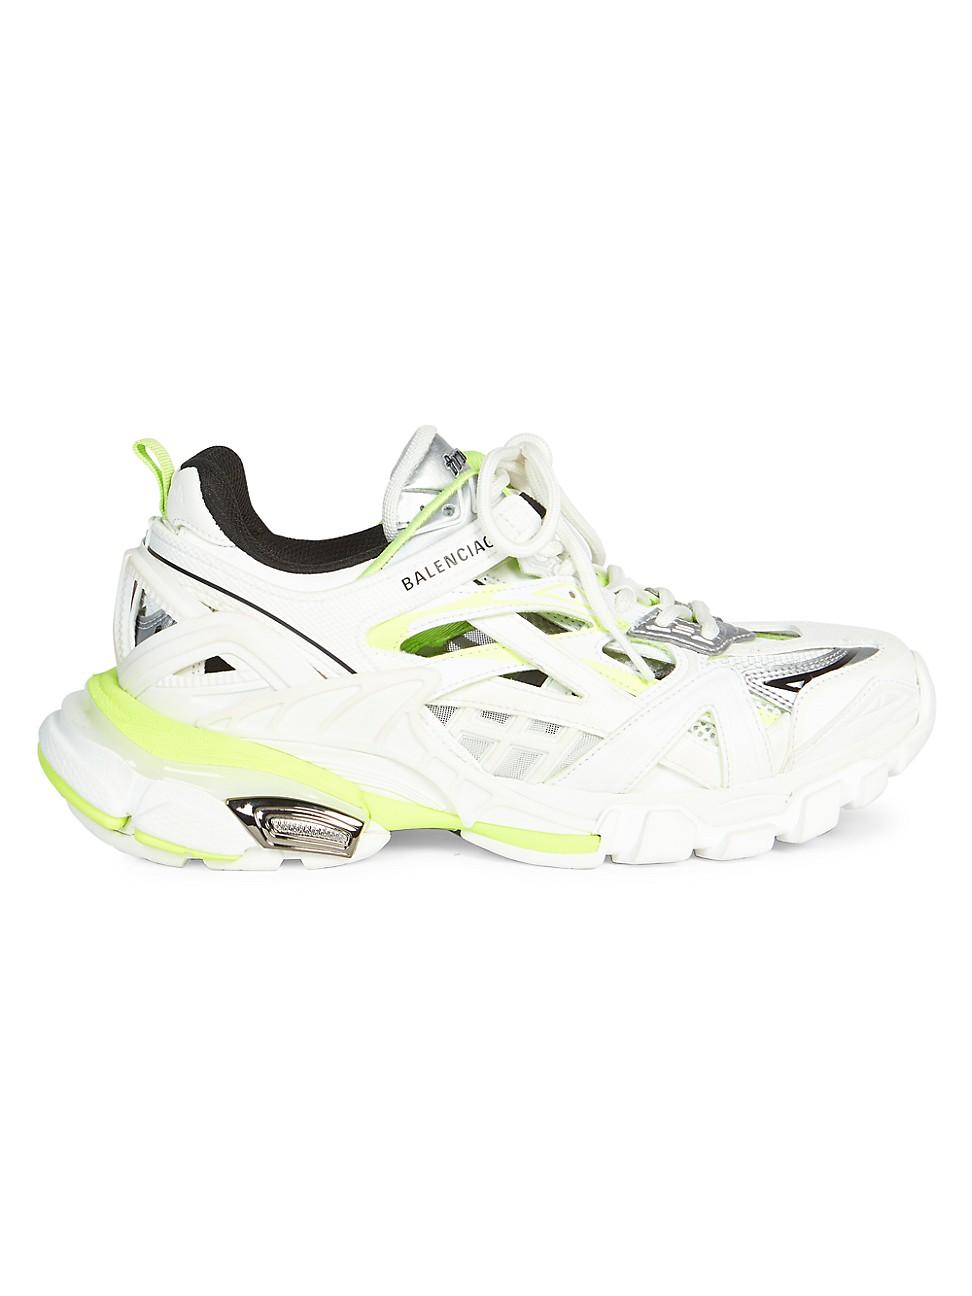 Balenciaga Chiffon Track.2 Sneaker in White - Save 36% - Lyst